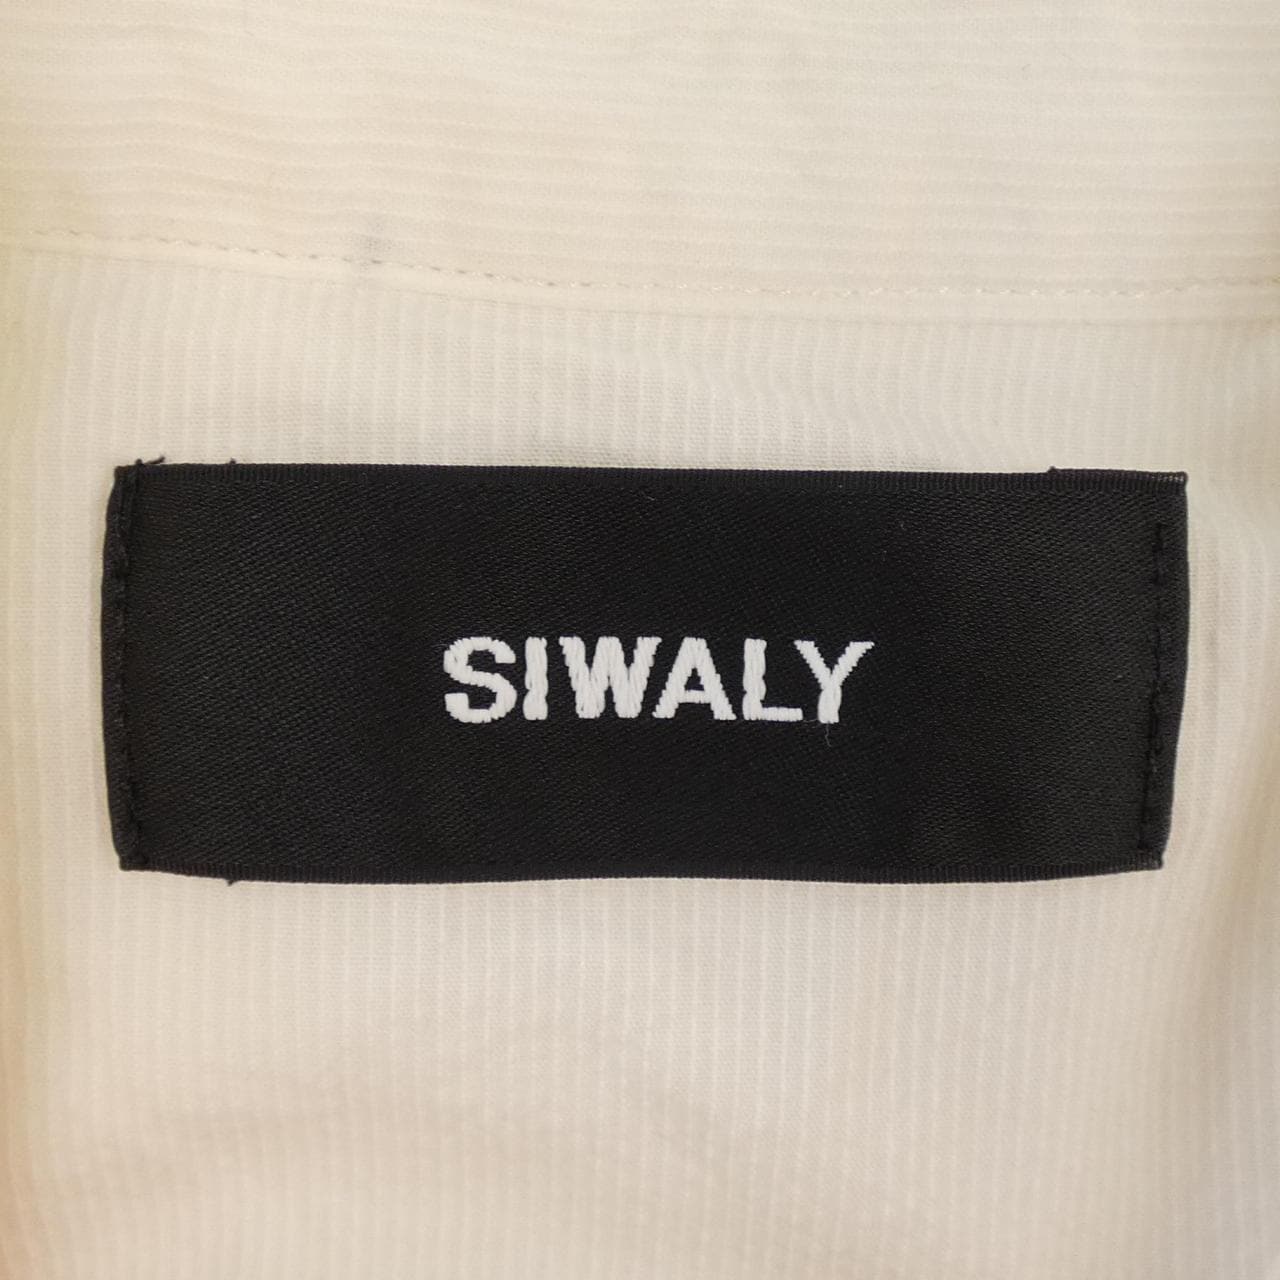 SIWALY shirt